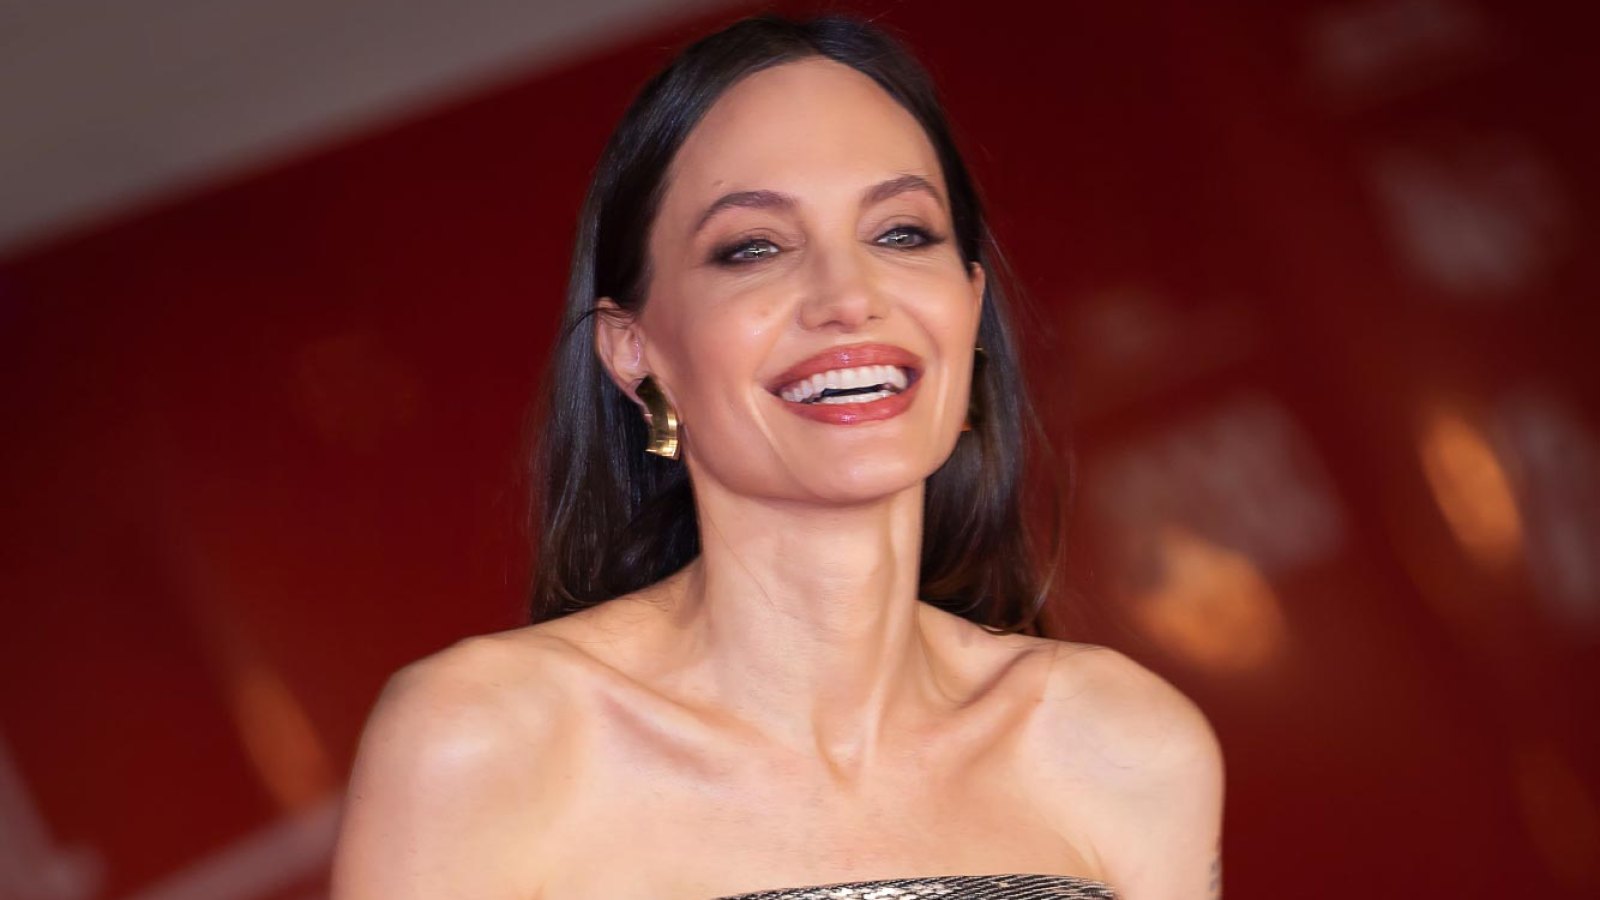 Angelina Jolie Fashion, News, Photos and Videos